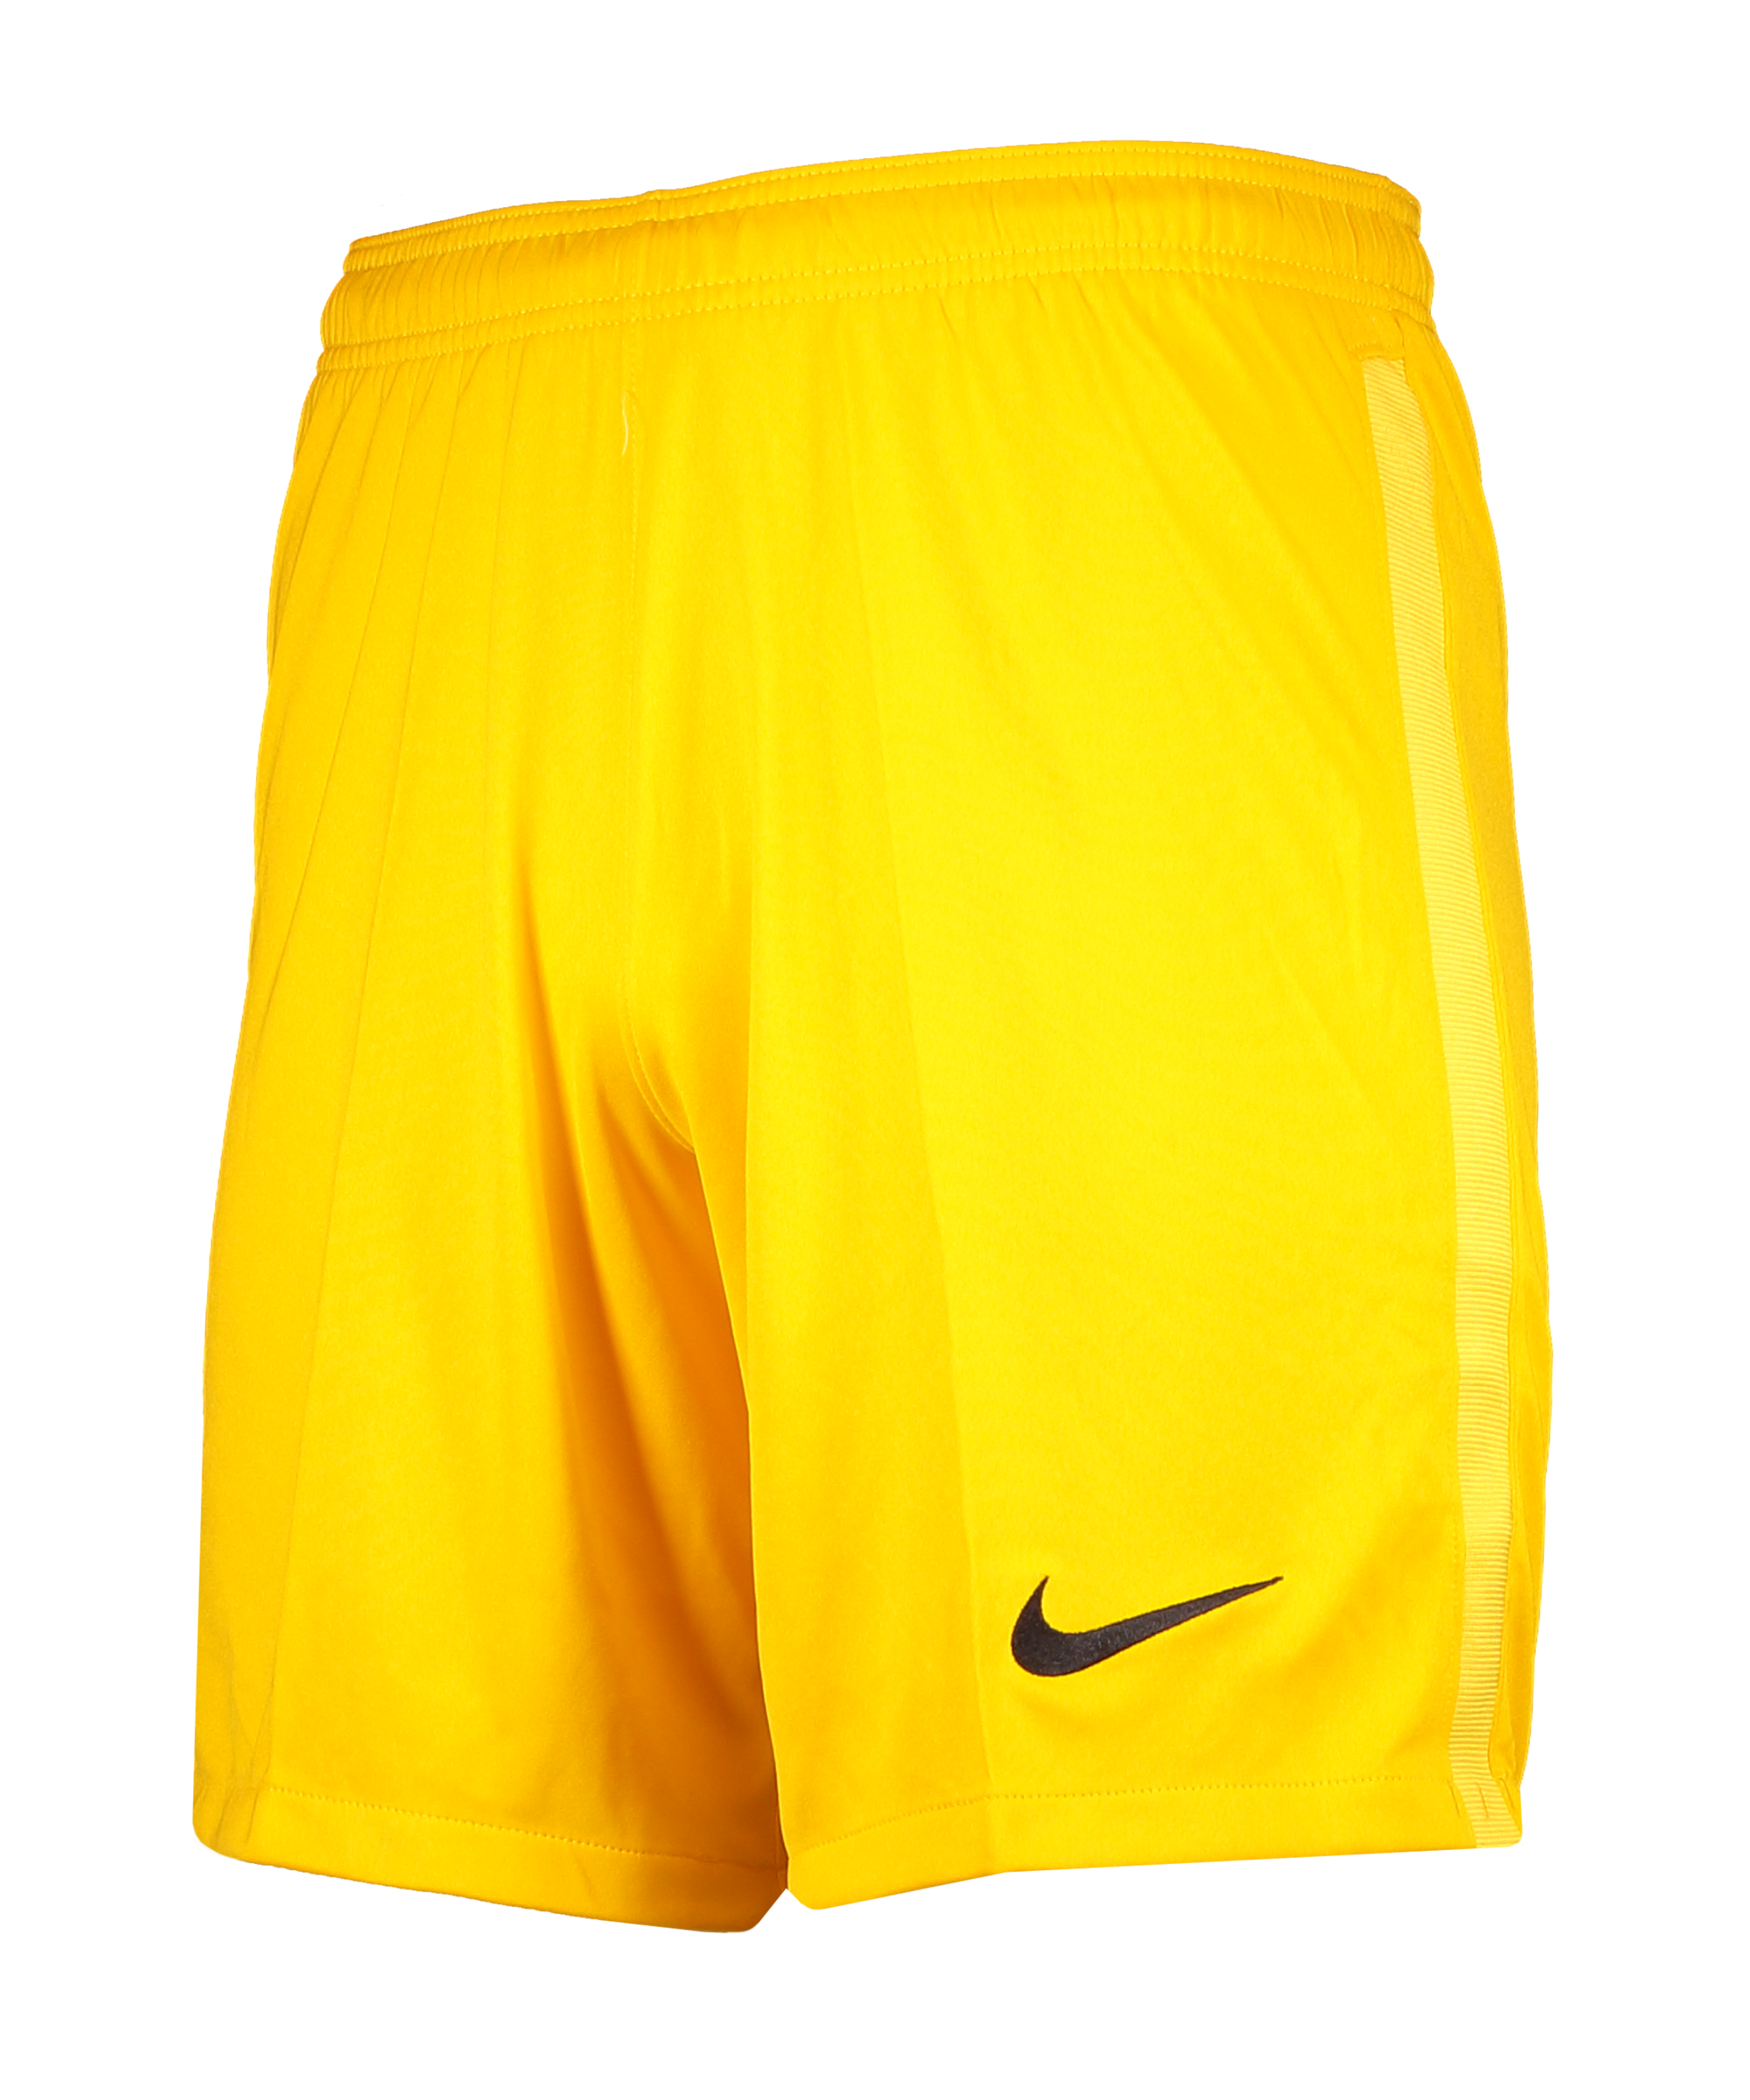 Nike Promo GK-Short yellow